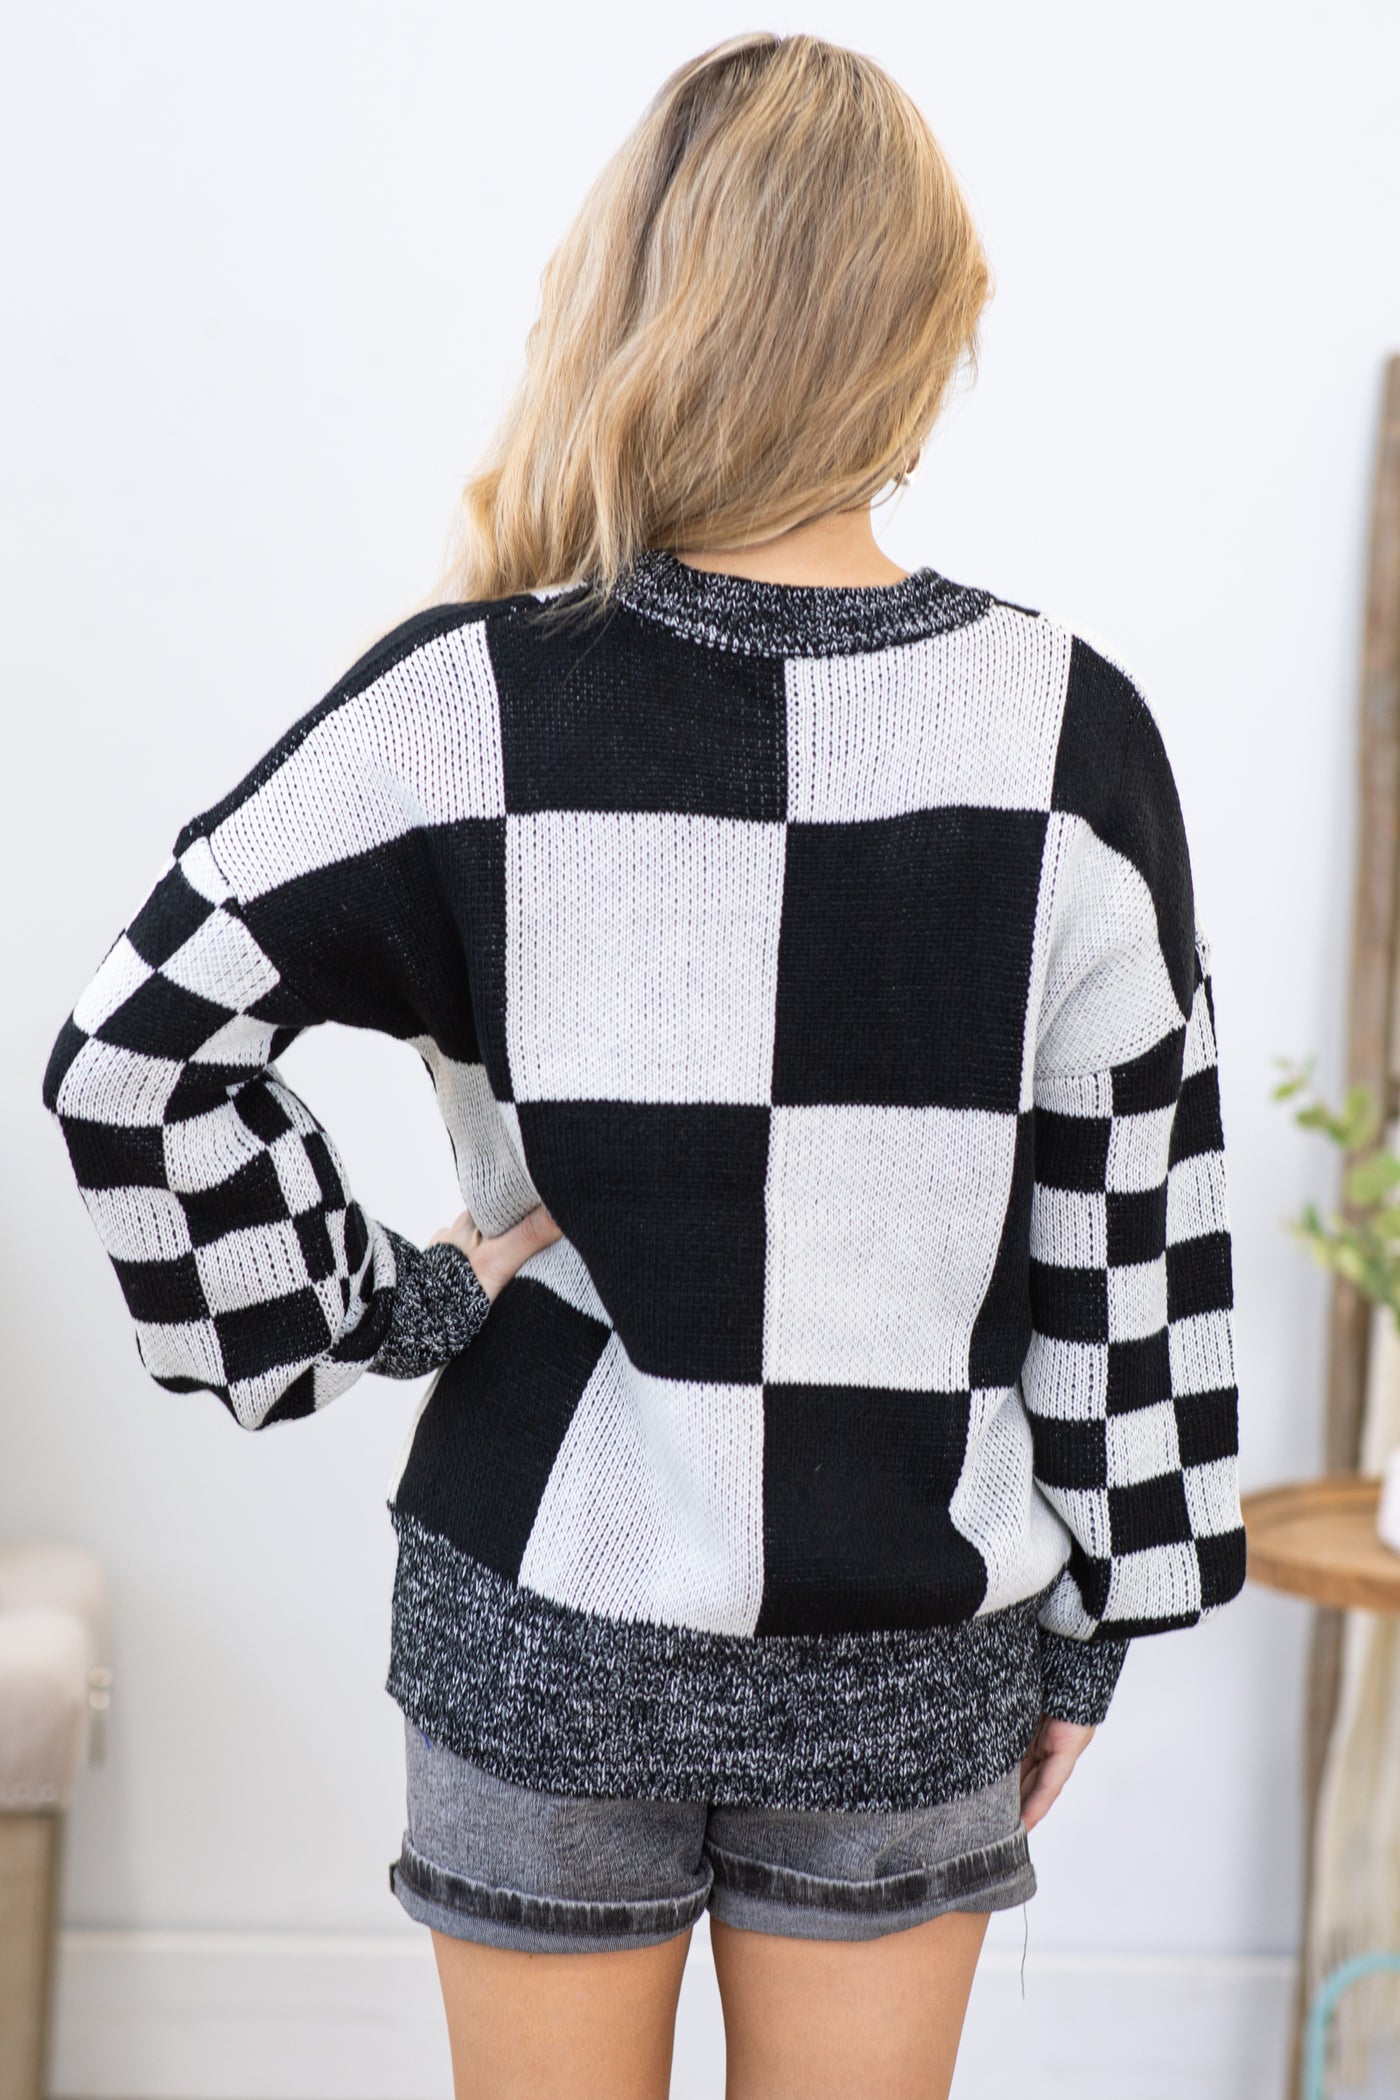 Black and White Checkerboard Sweater